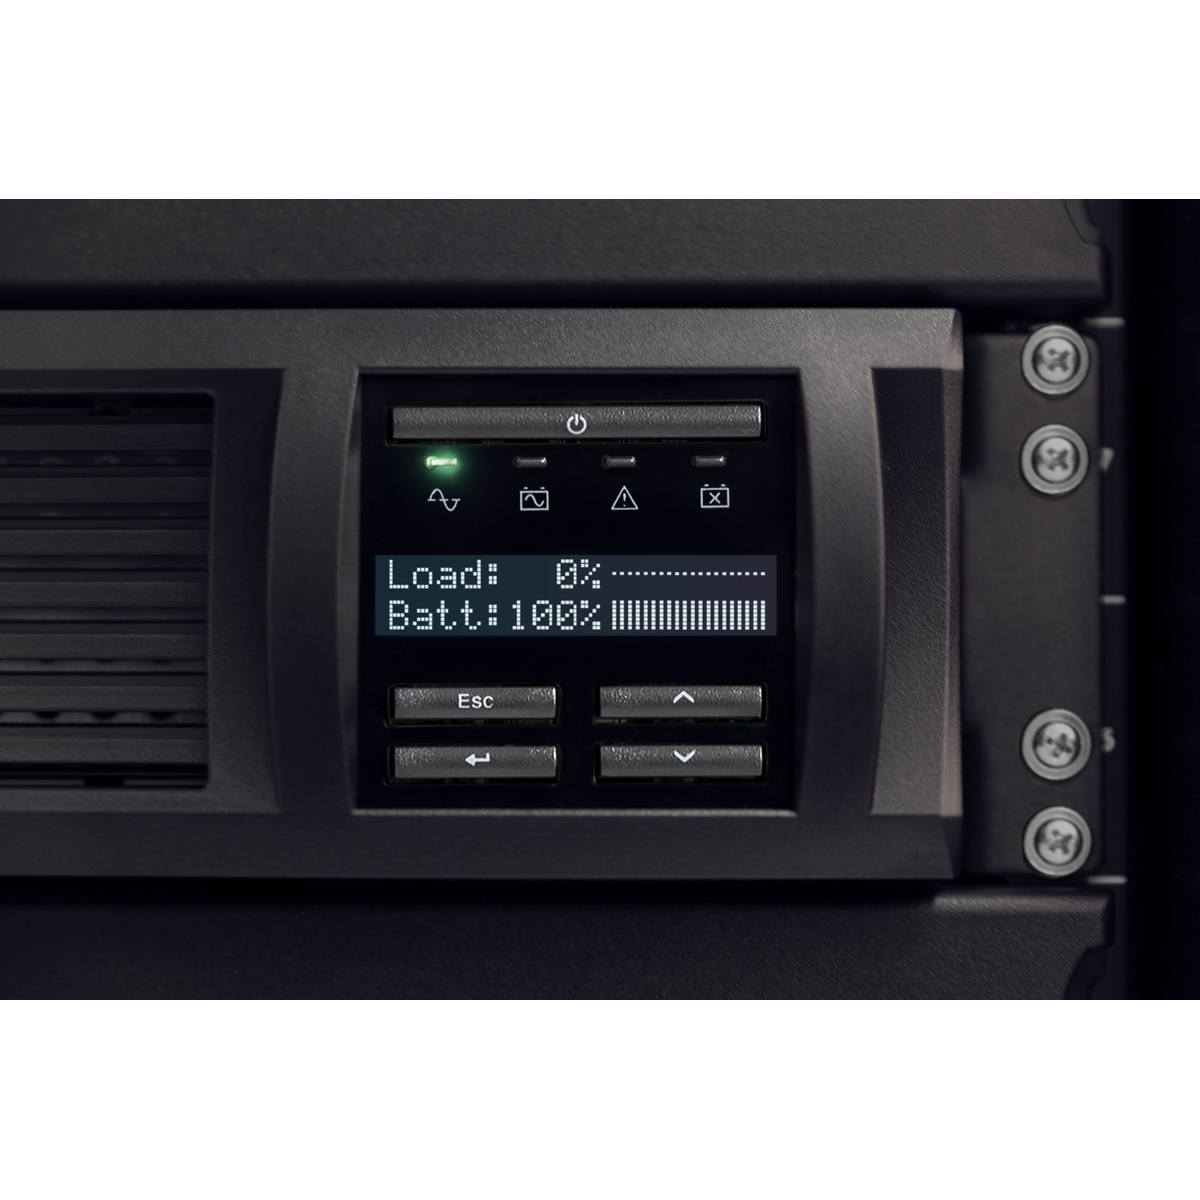 Smart-UPS 750VA RM 230V W Network Card